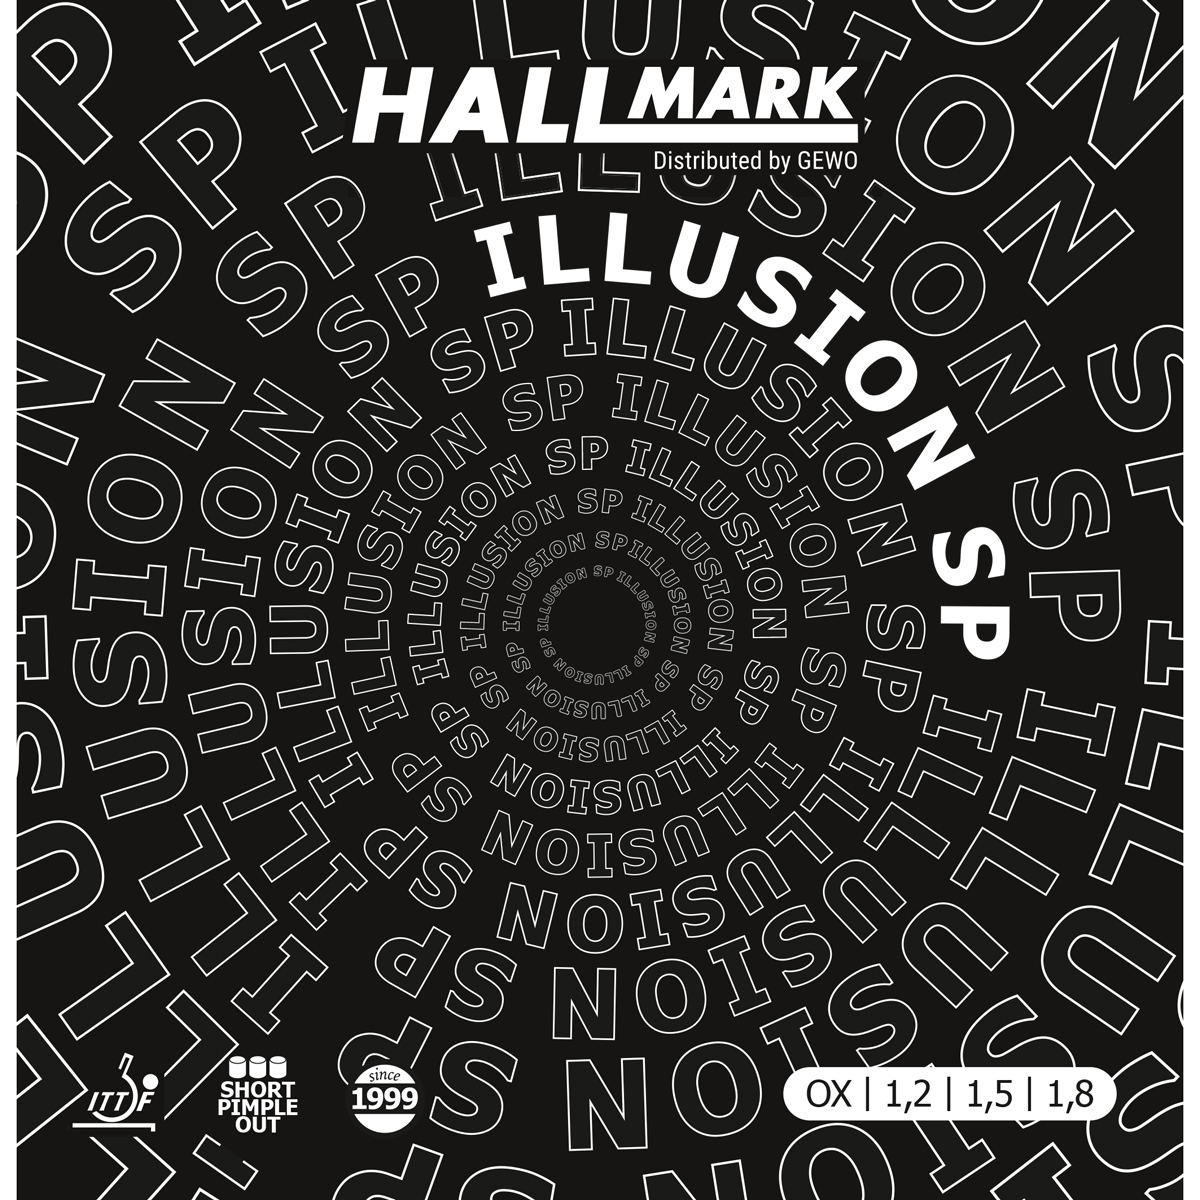 HALLMARK rubber Illusion-SP